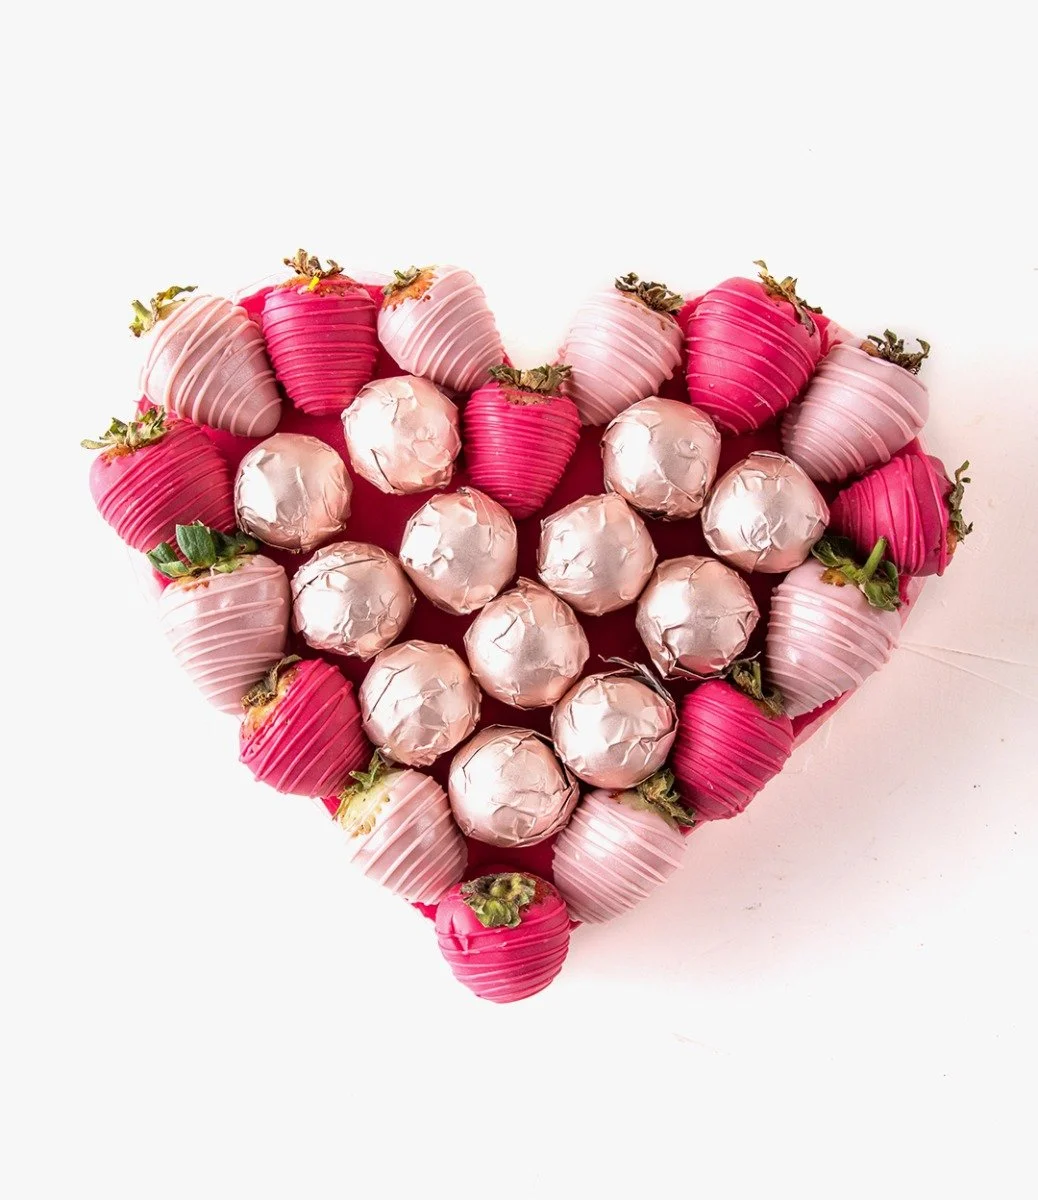 Strawberries & Bon Bons by NJD